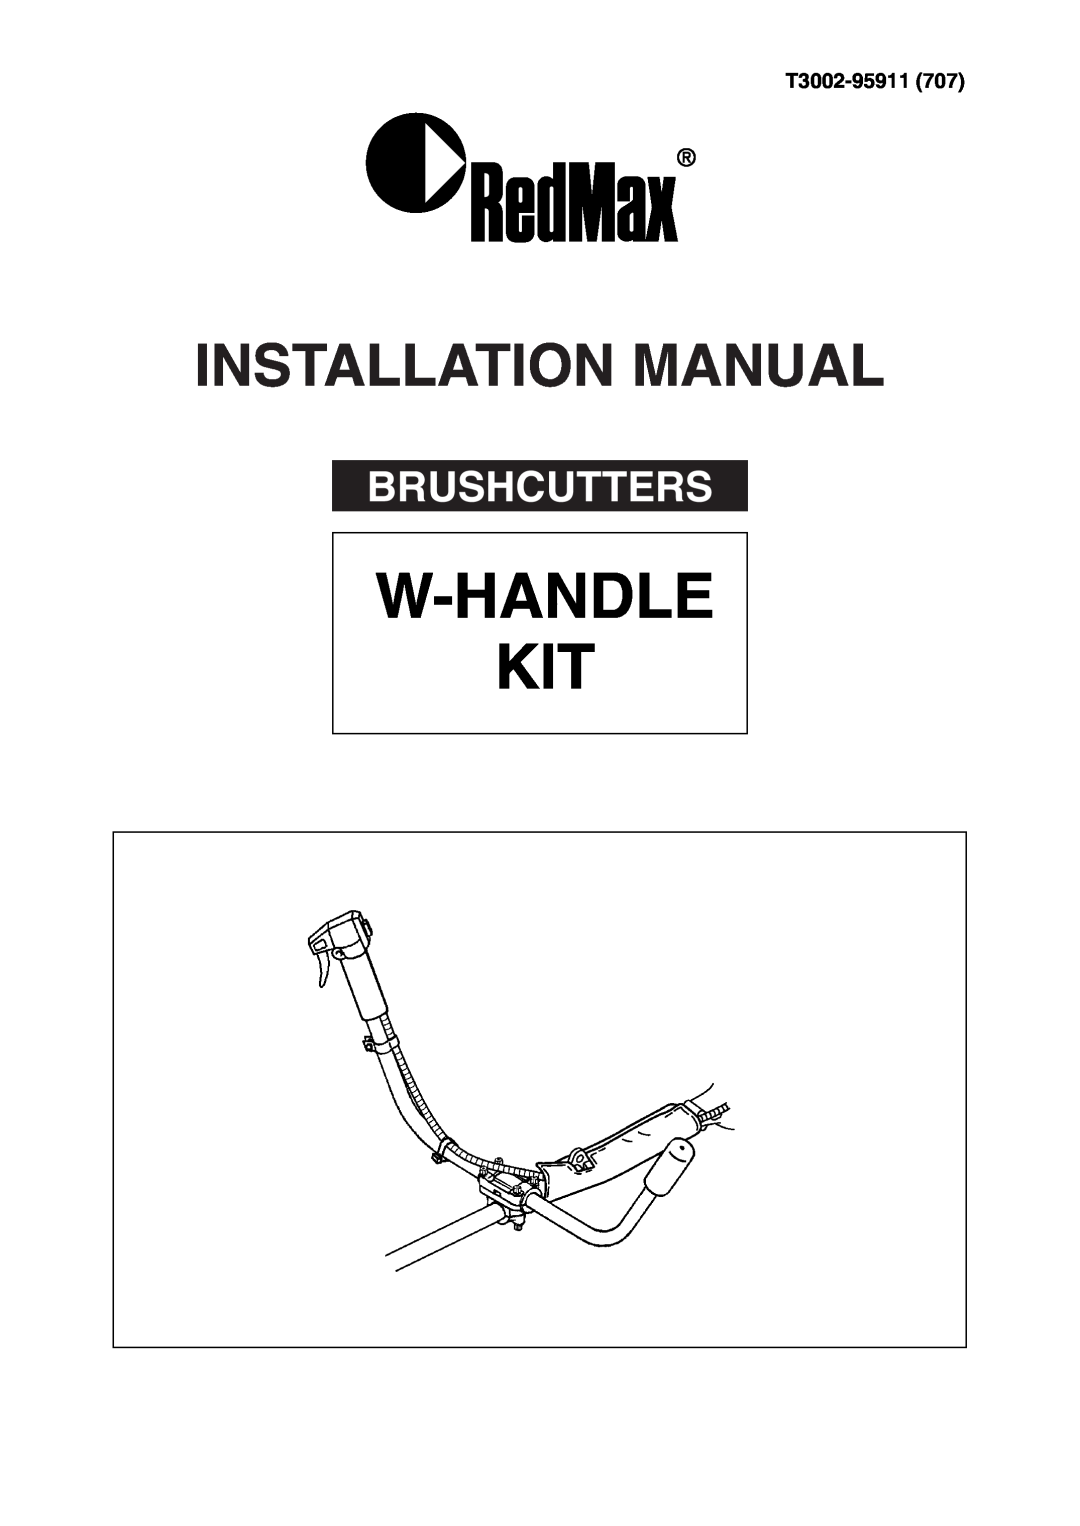 Zenoah installation manual T3002-95911707, W-Handle Kit, Installation Manual, Brushcutters 